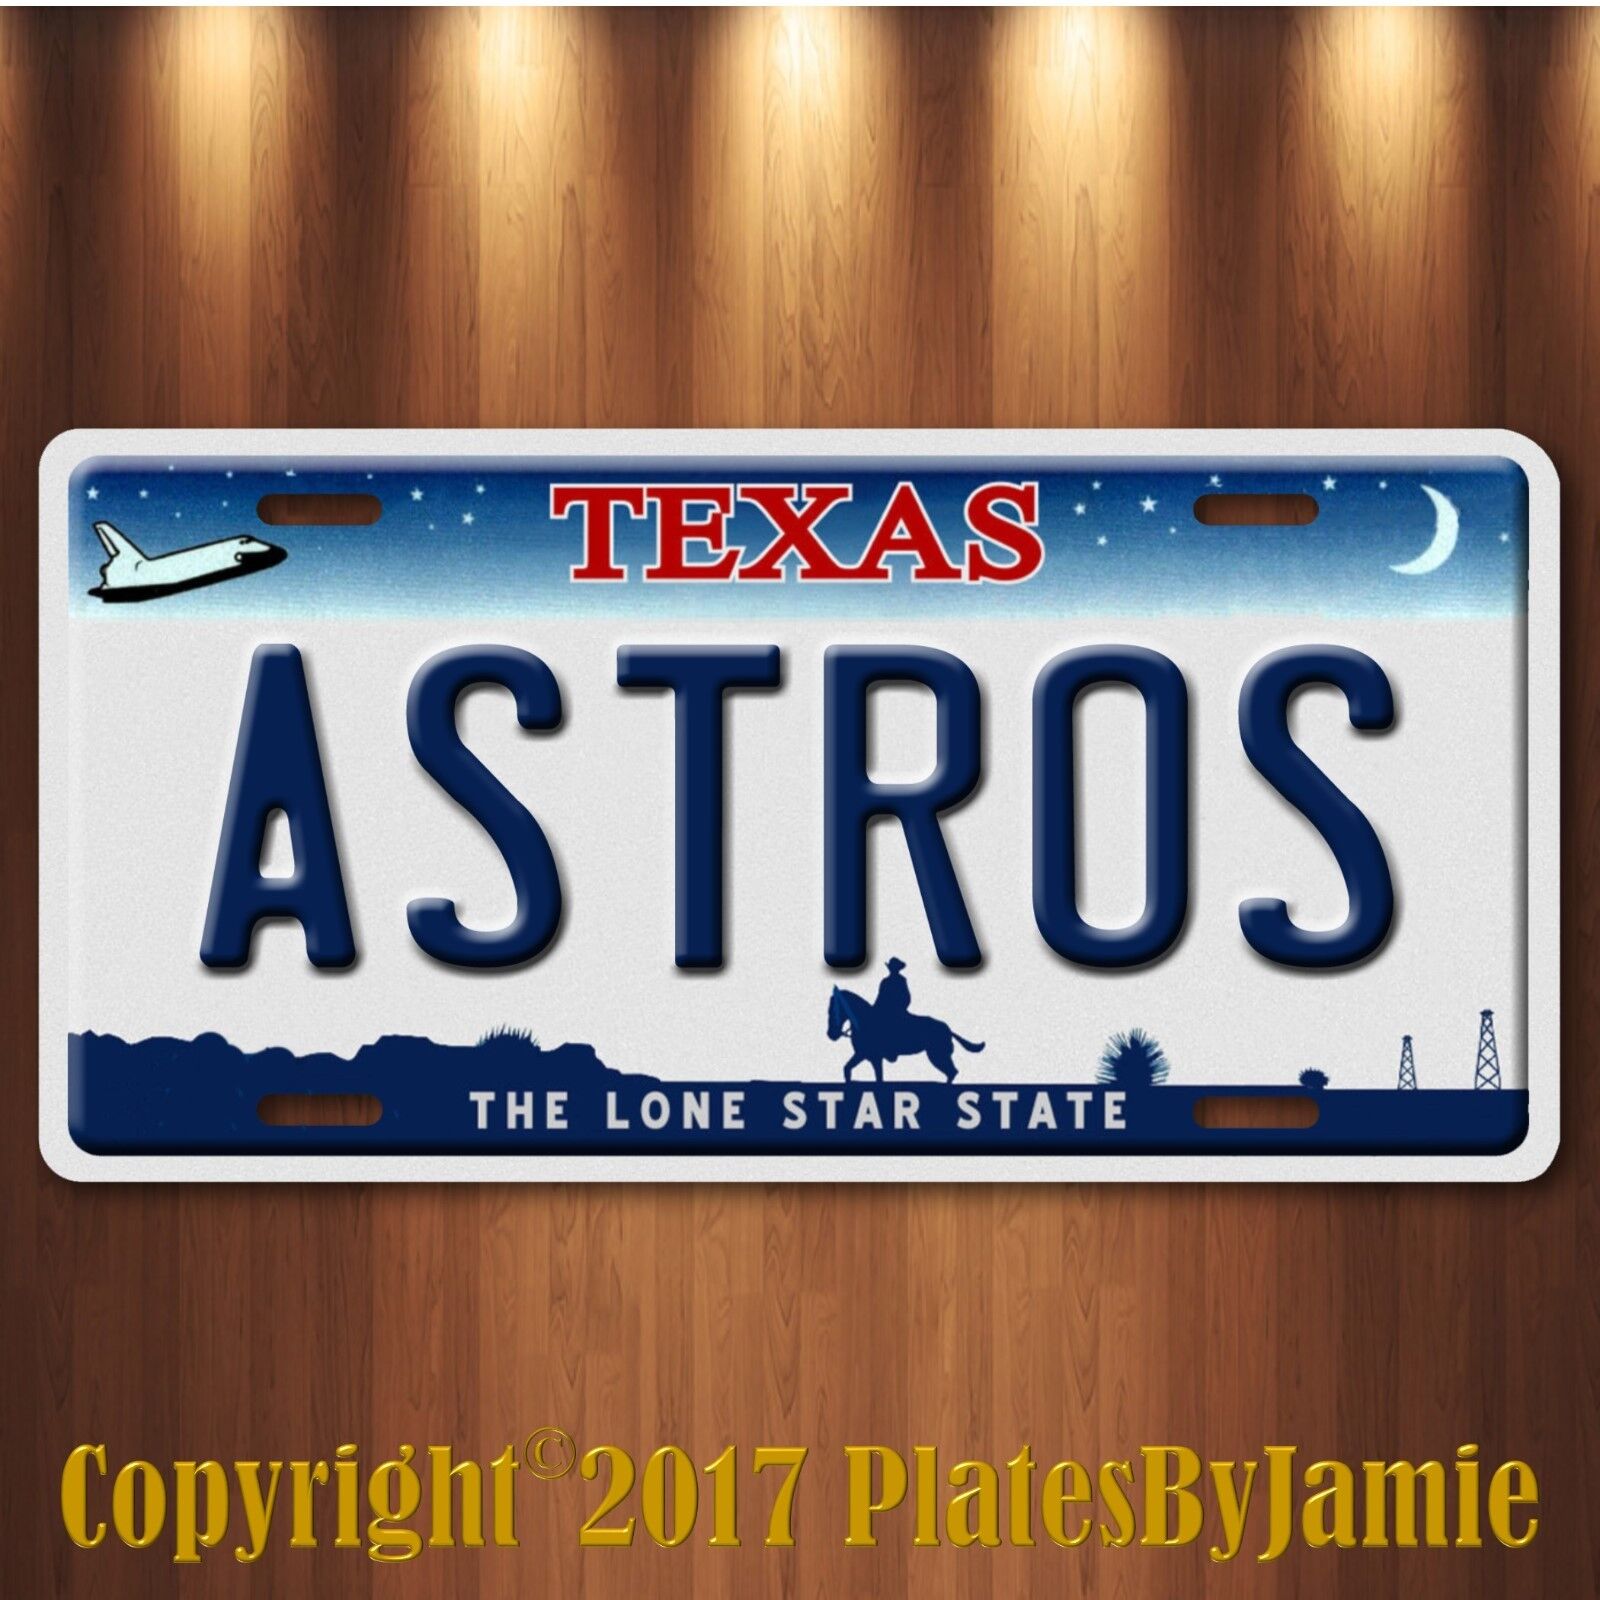 Houston Texas ASTROS World Series 2017 Champions Baseball Team License Plate Tag